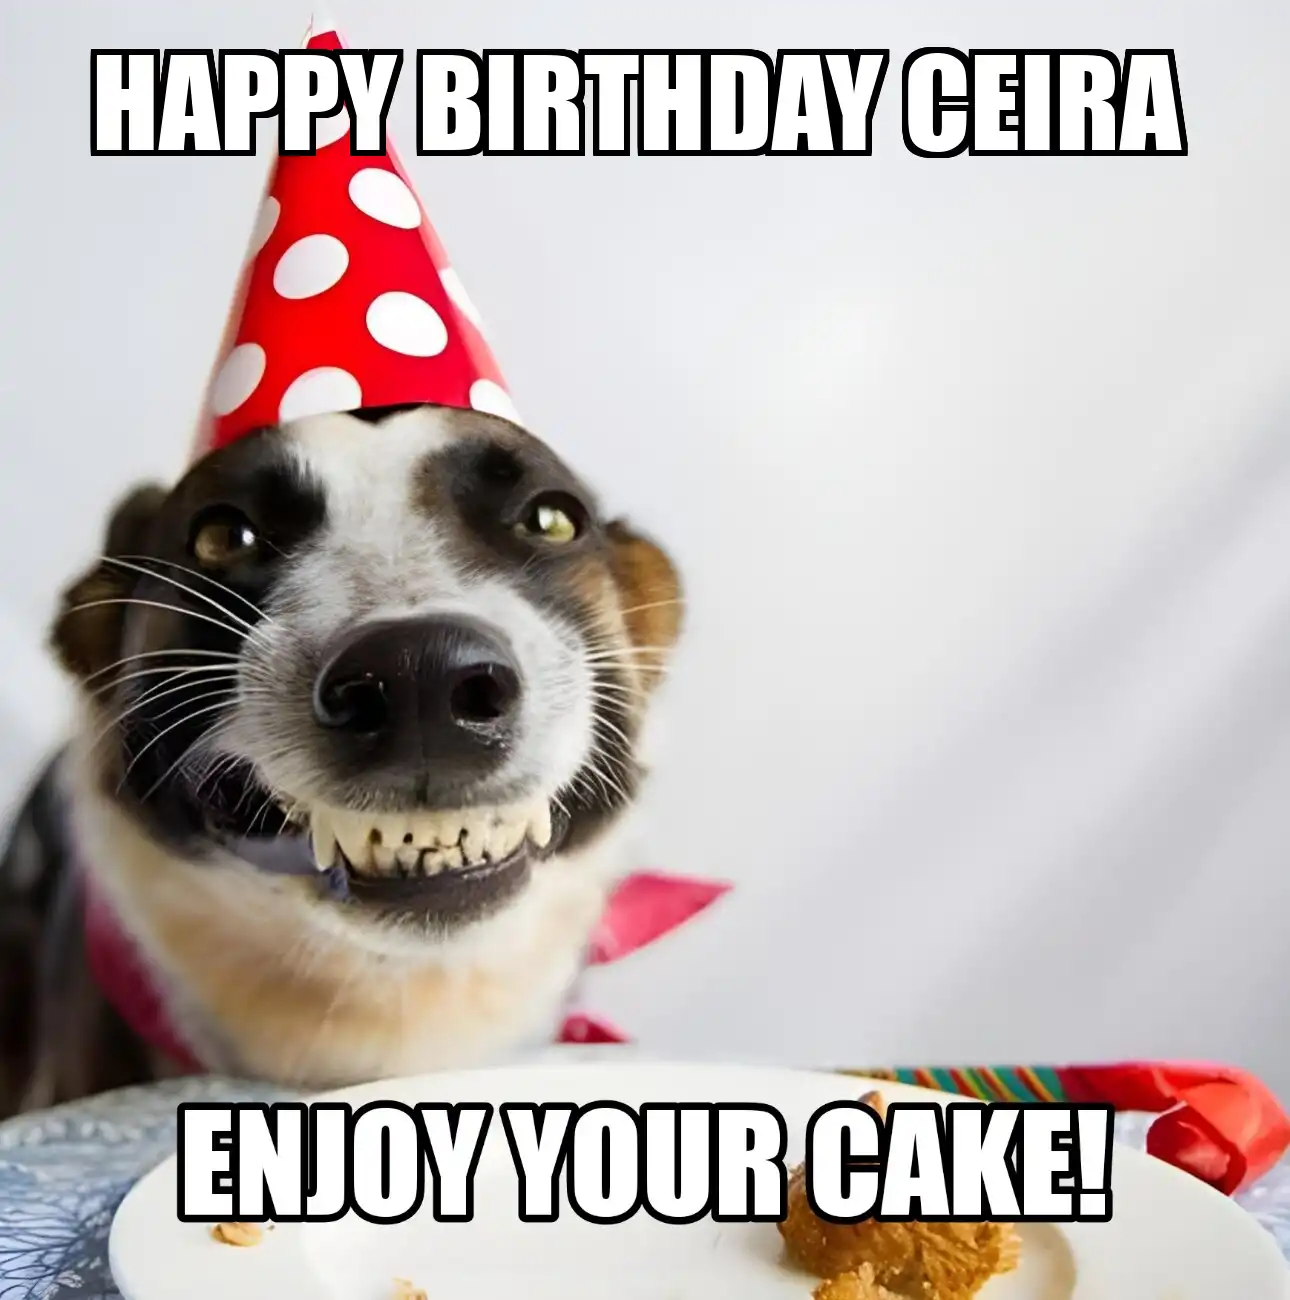 Happy Birthday Ceira Enjoy Your Cake Dog Meme